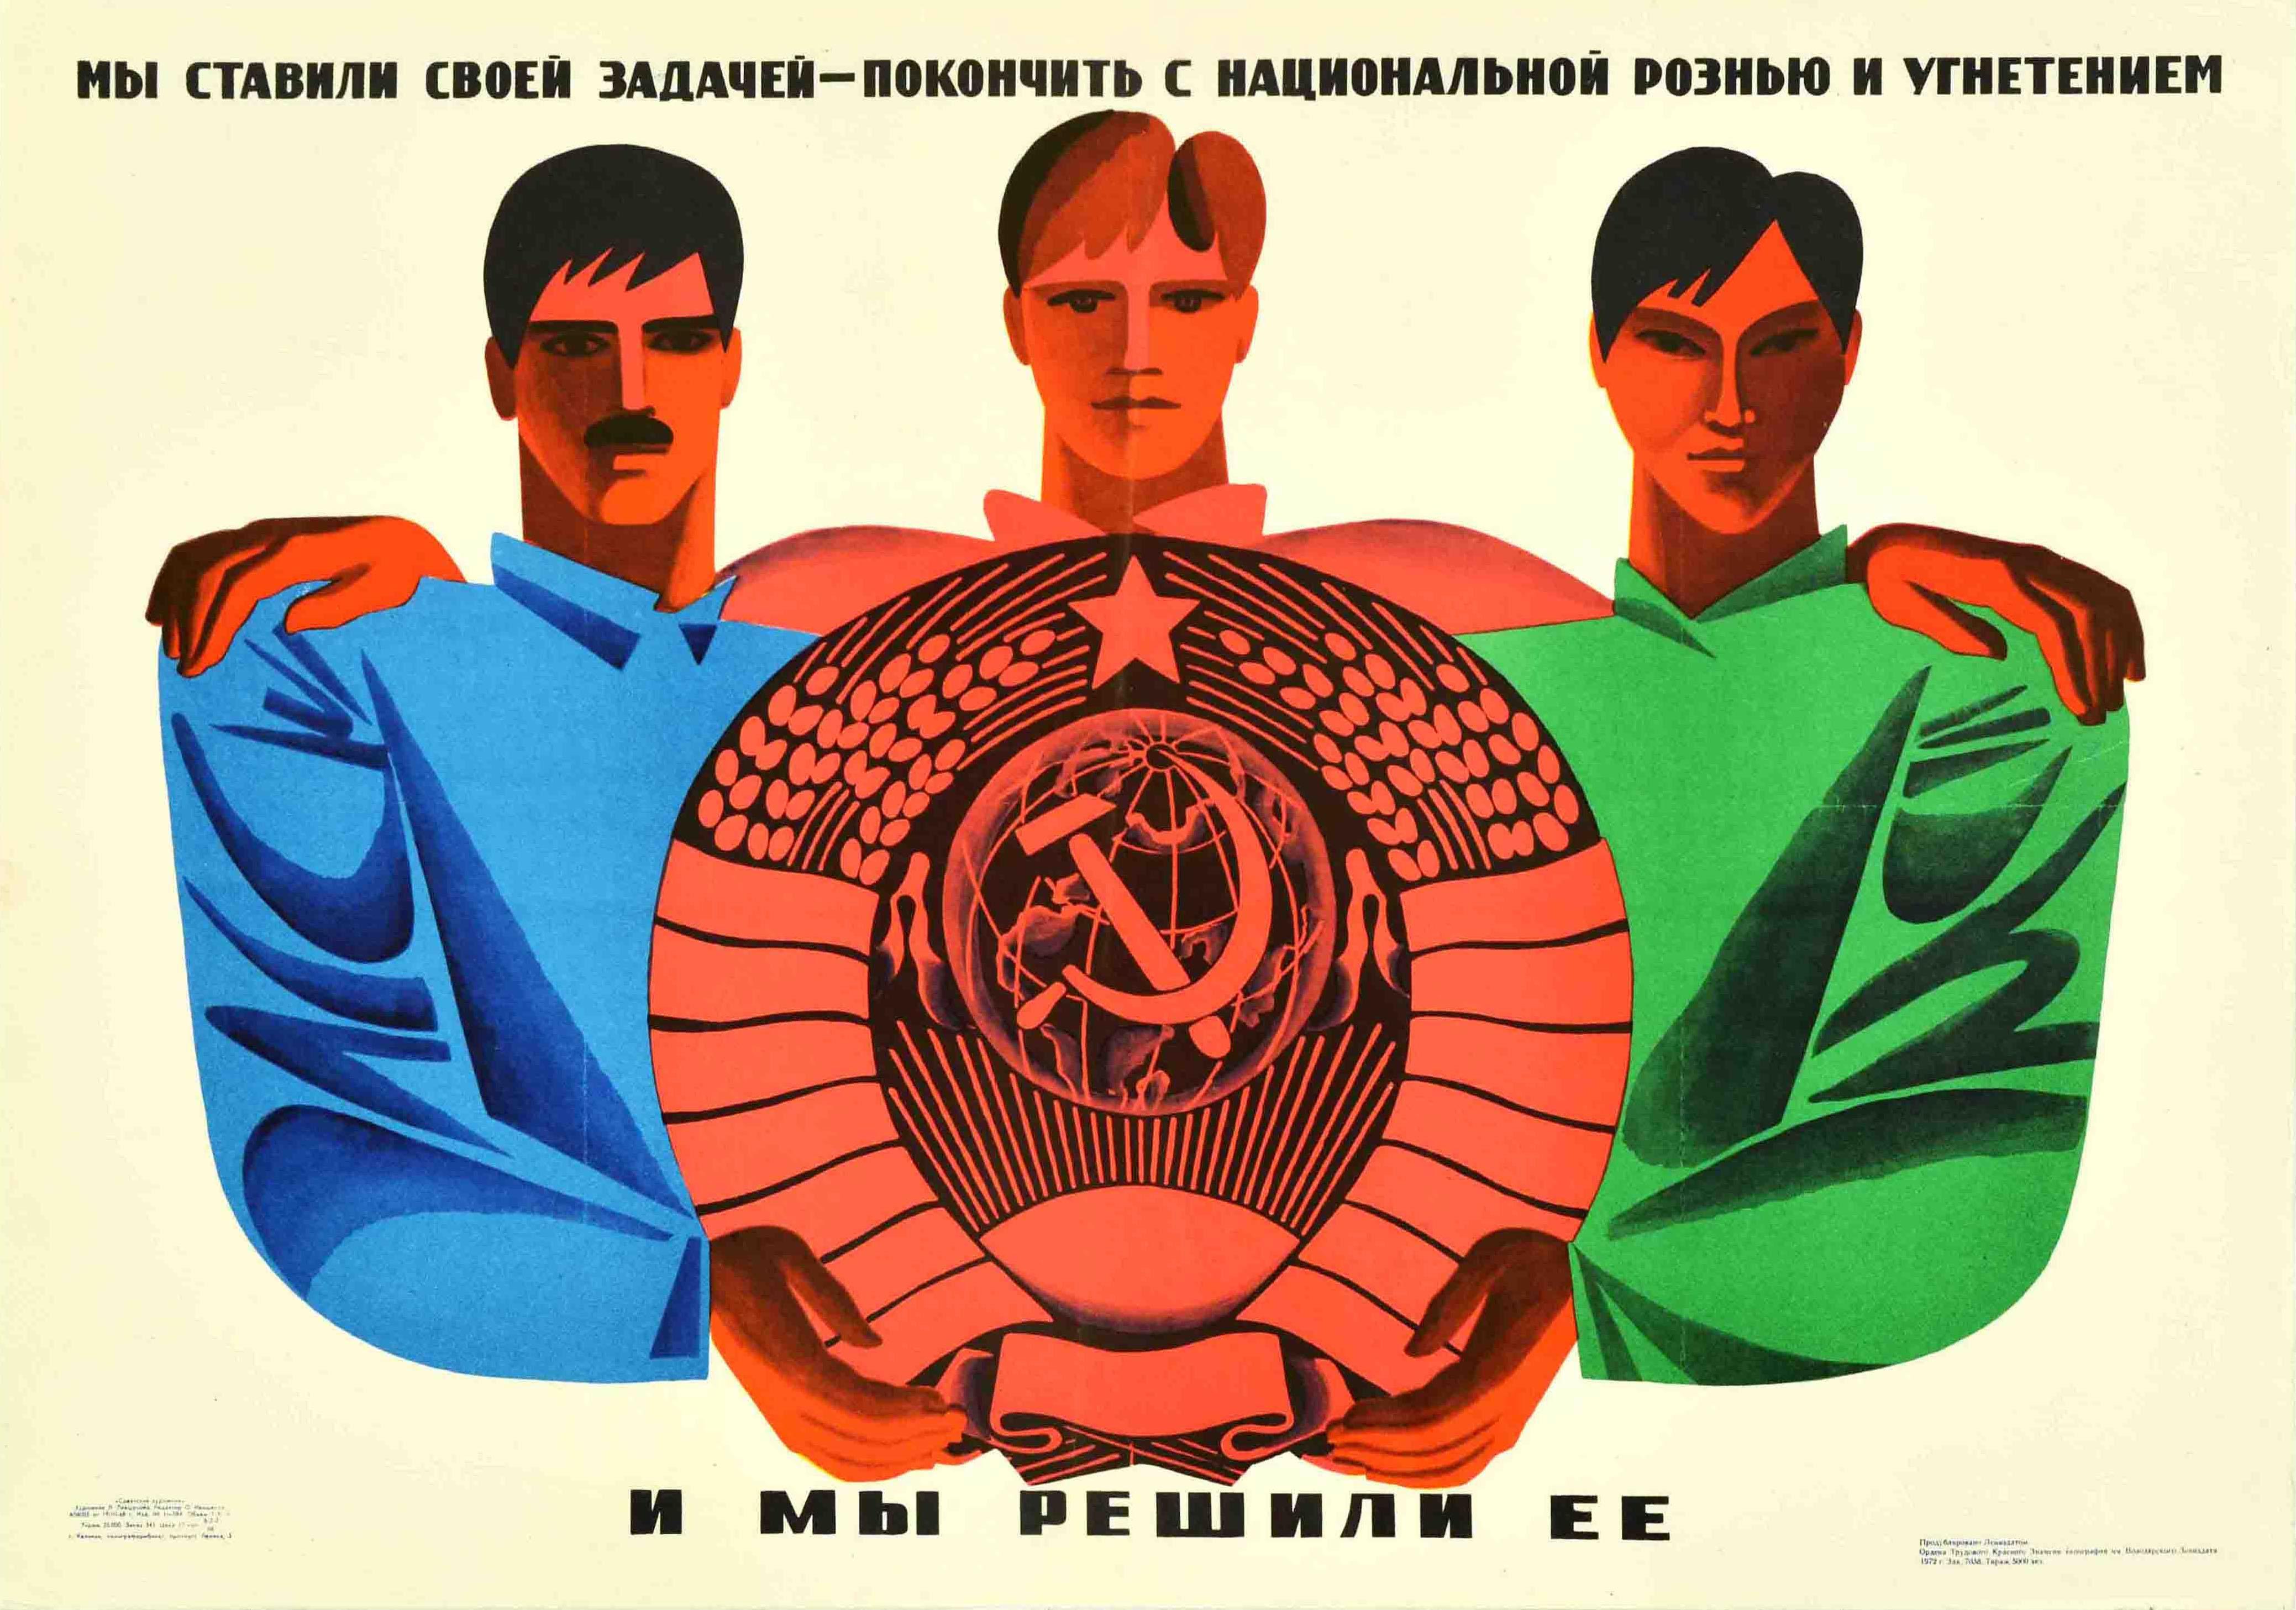 Unknown Print - Original Vintage Soviet Propaganda Poster Ethnic Strife Oppression USSR Racism